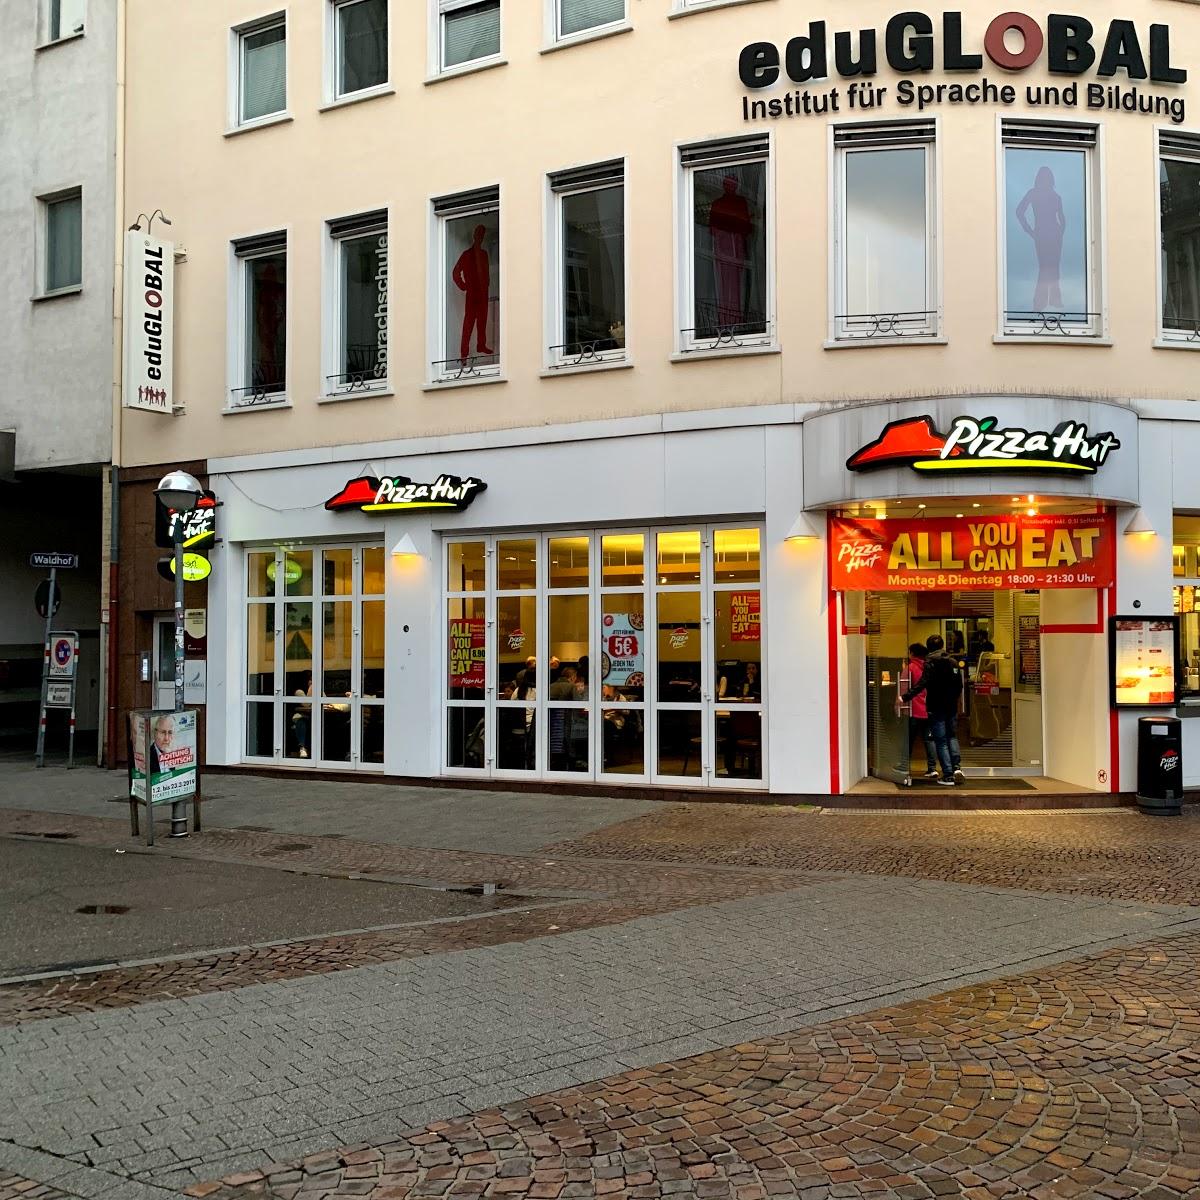 Restaurant "Pizza Hut" in Karlsruhe